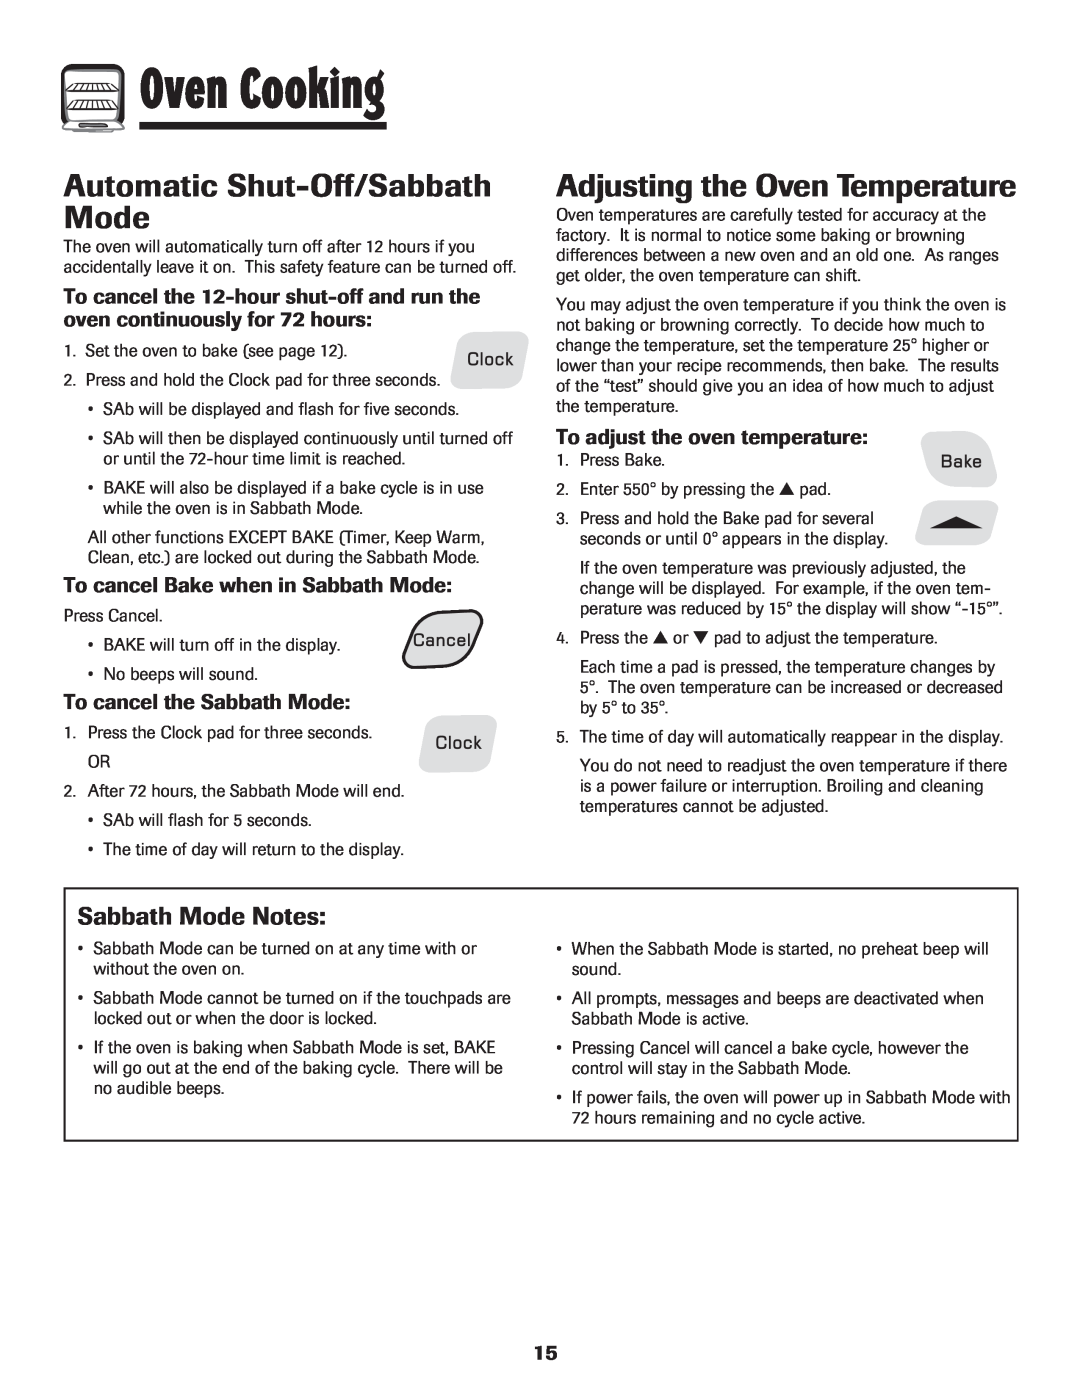 Amana 8113P515-60 manual Automatic Shut-Off/SabbathMode, Adjusting the Oven Temperature, Sabbath Mode Notes, Oven Cooking 